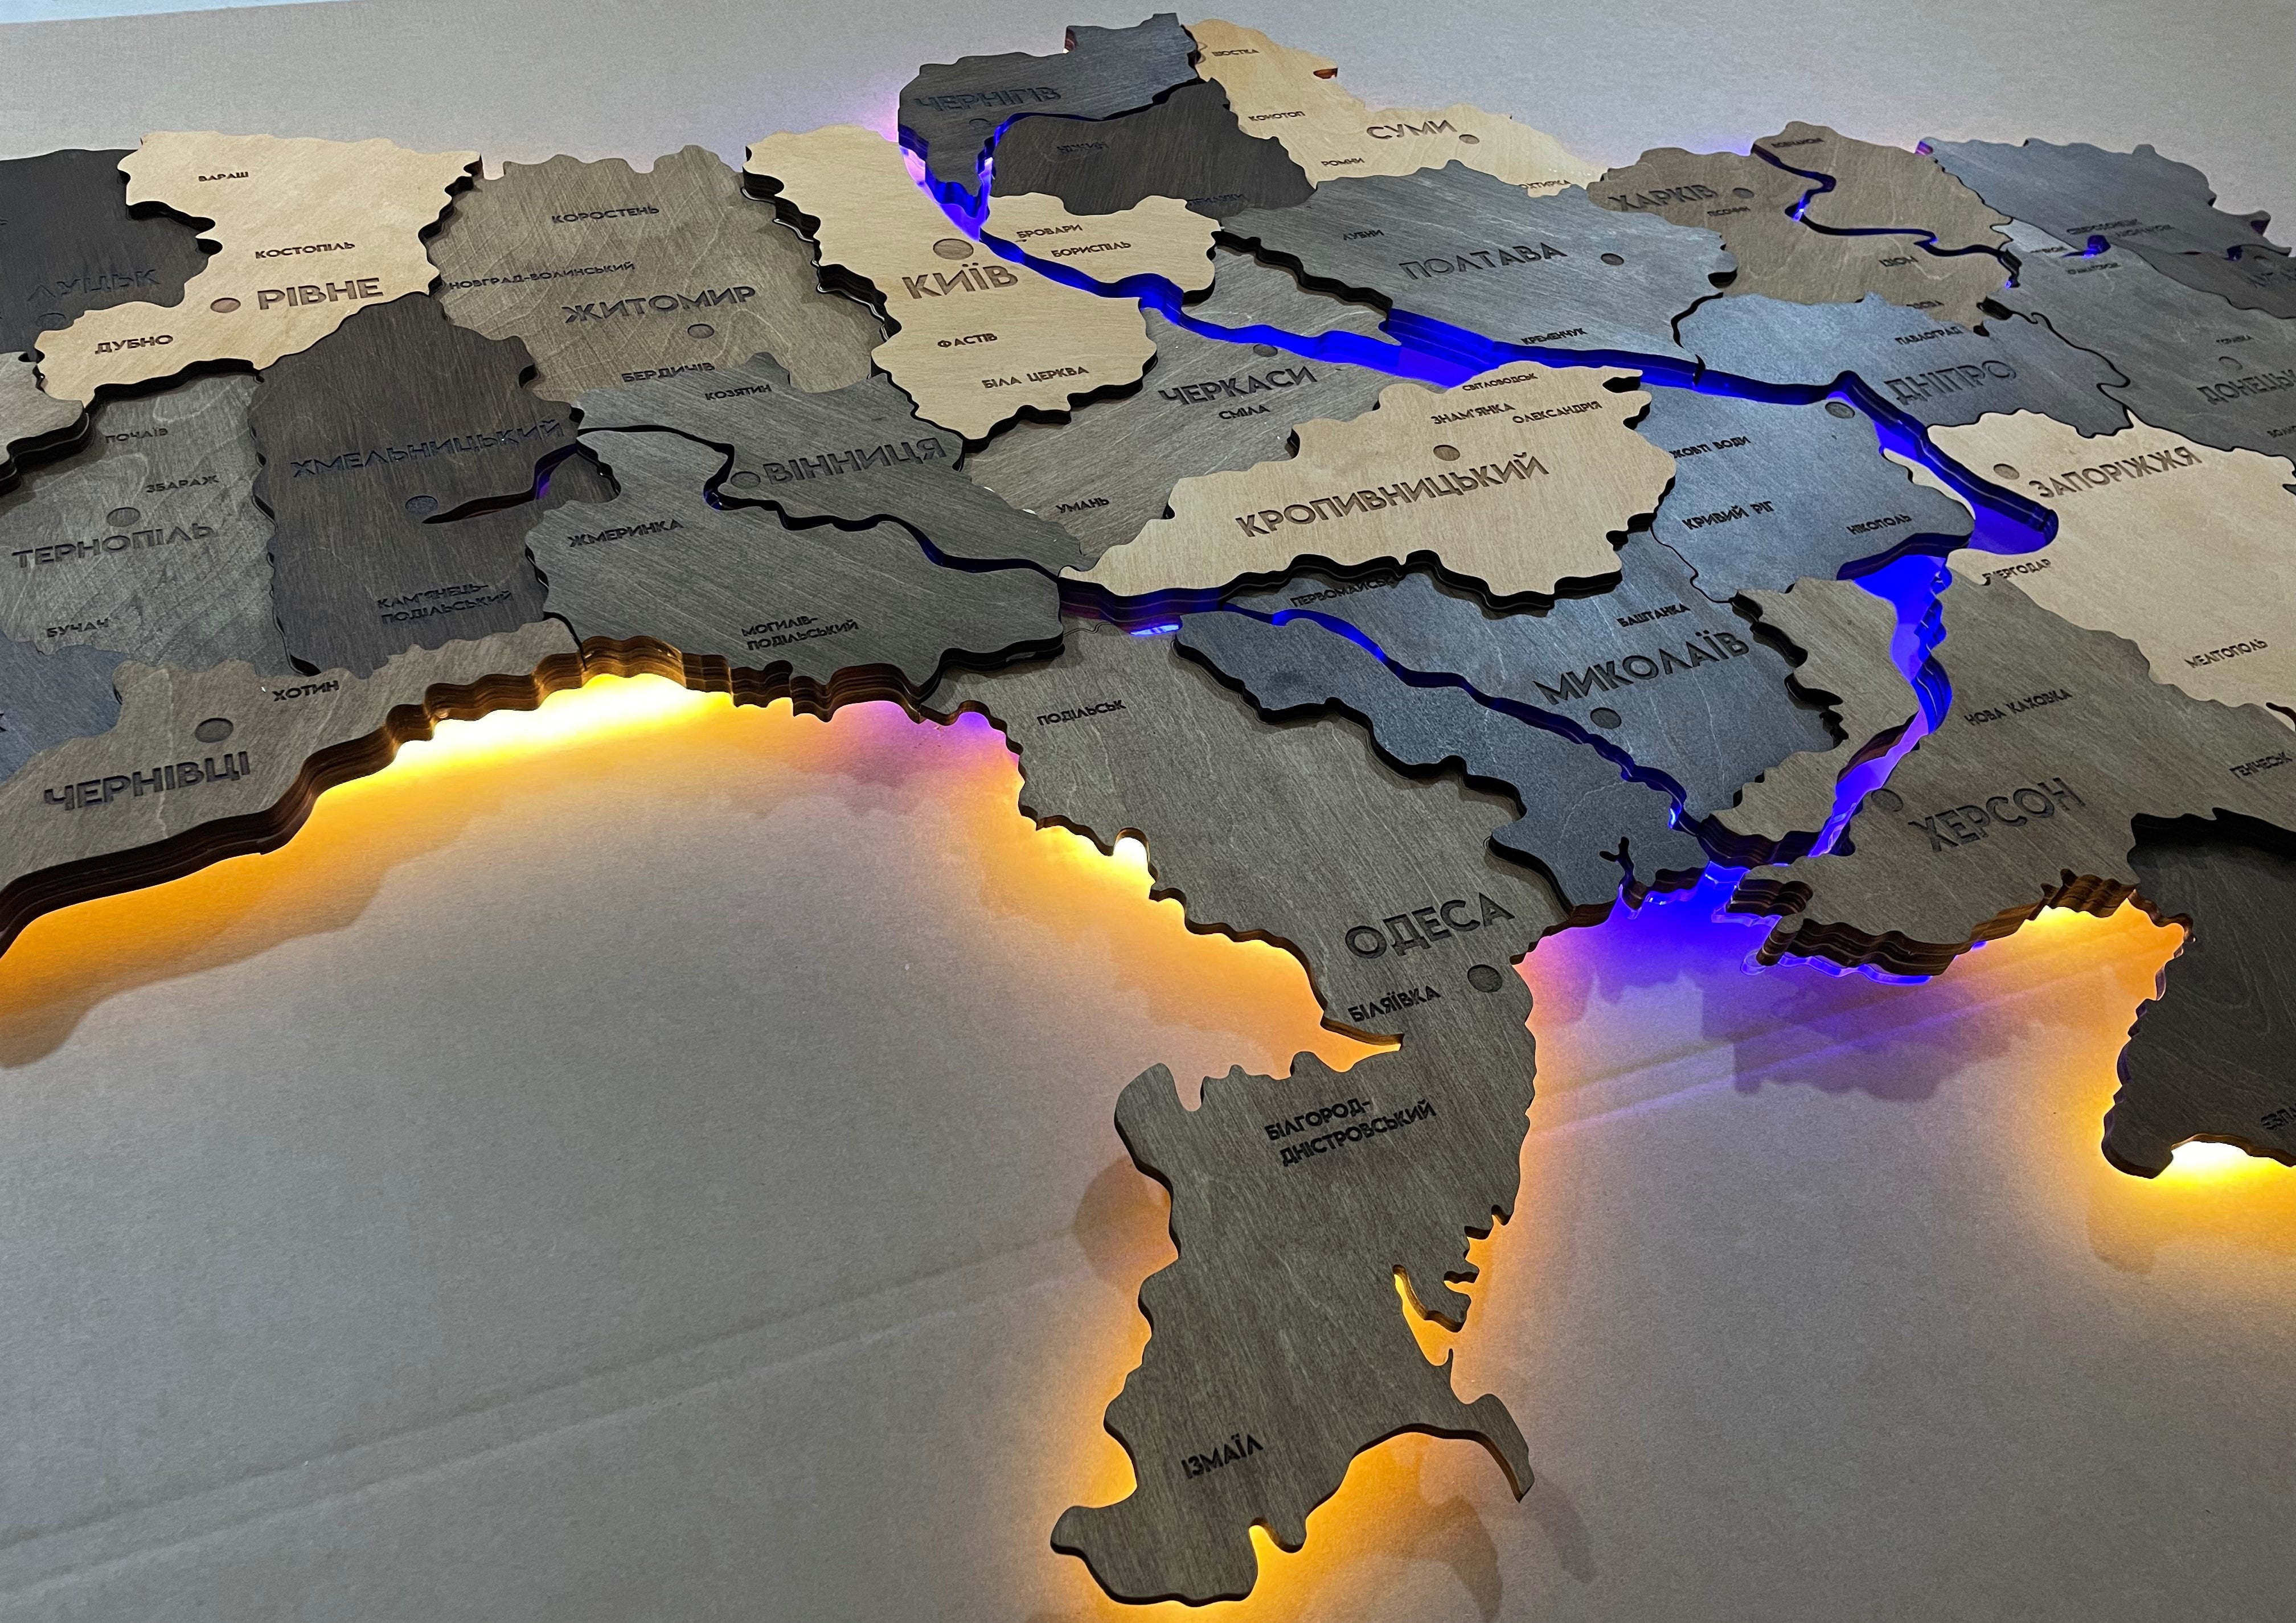 multilayer-ukraine-led-map-with-backlighting-of-rivers-color-elis